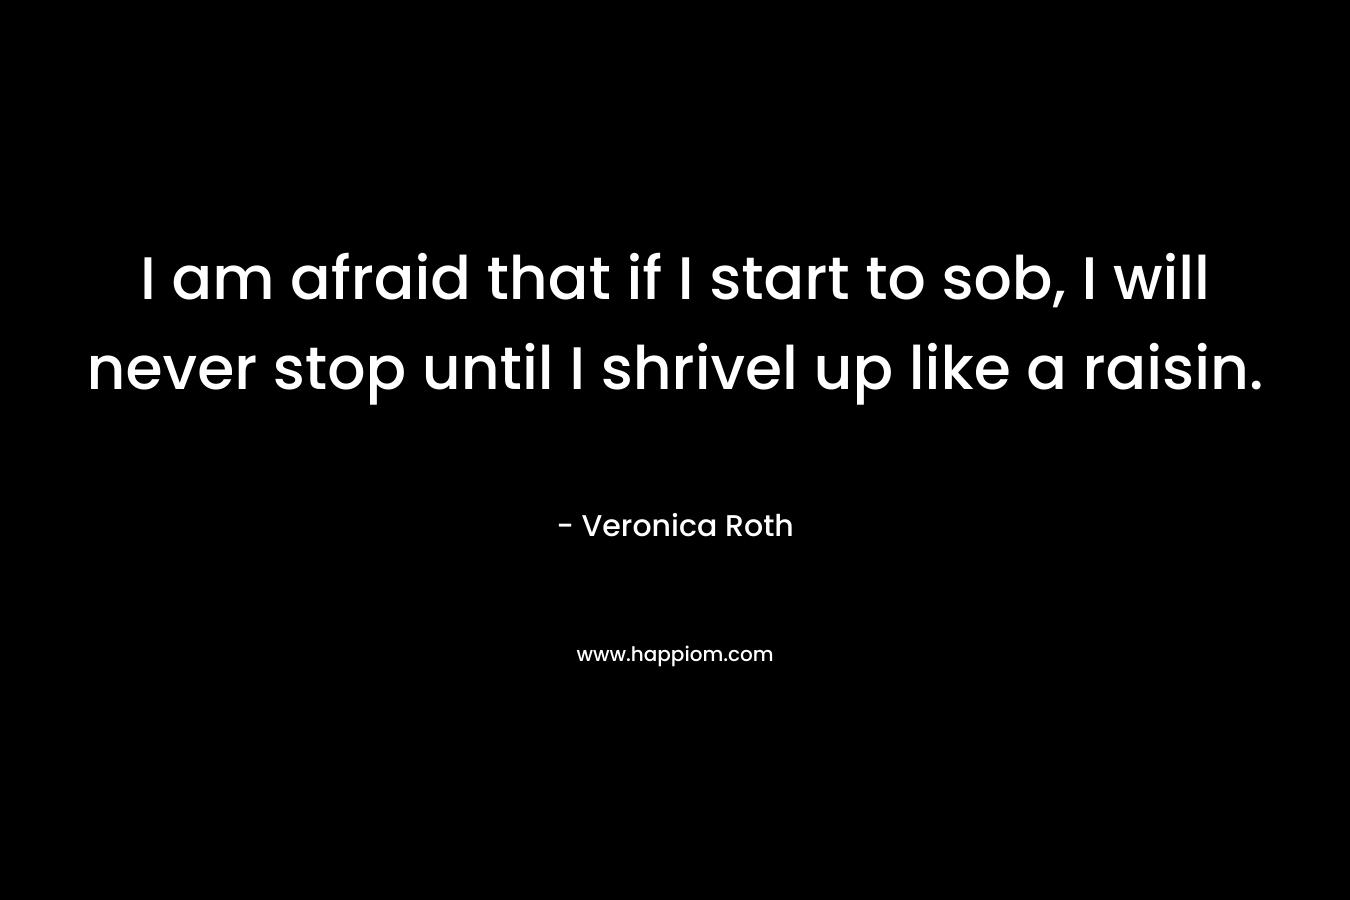 I am afraid that if I start to sob, I will never stop until I shrivel up like a raisin. – Veronica Roth